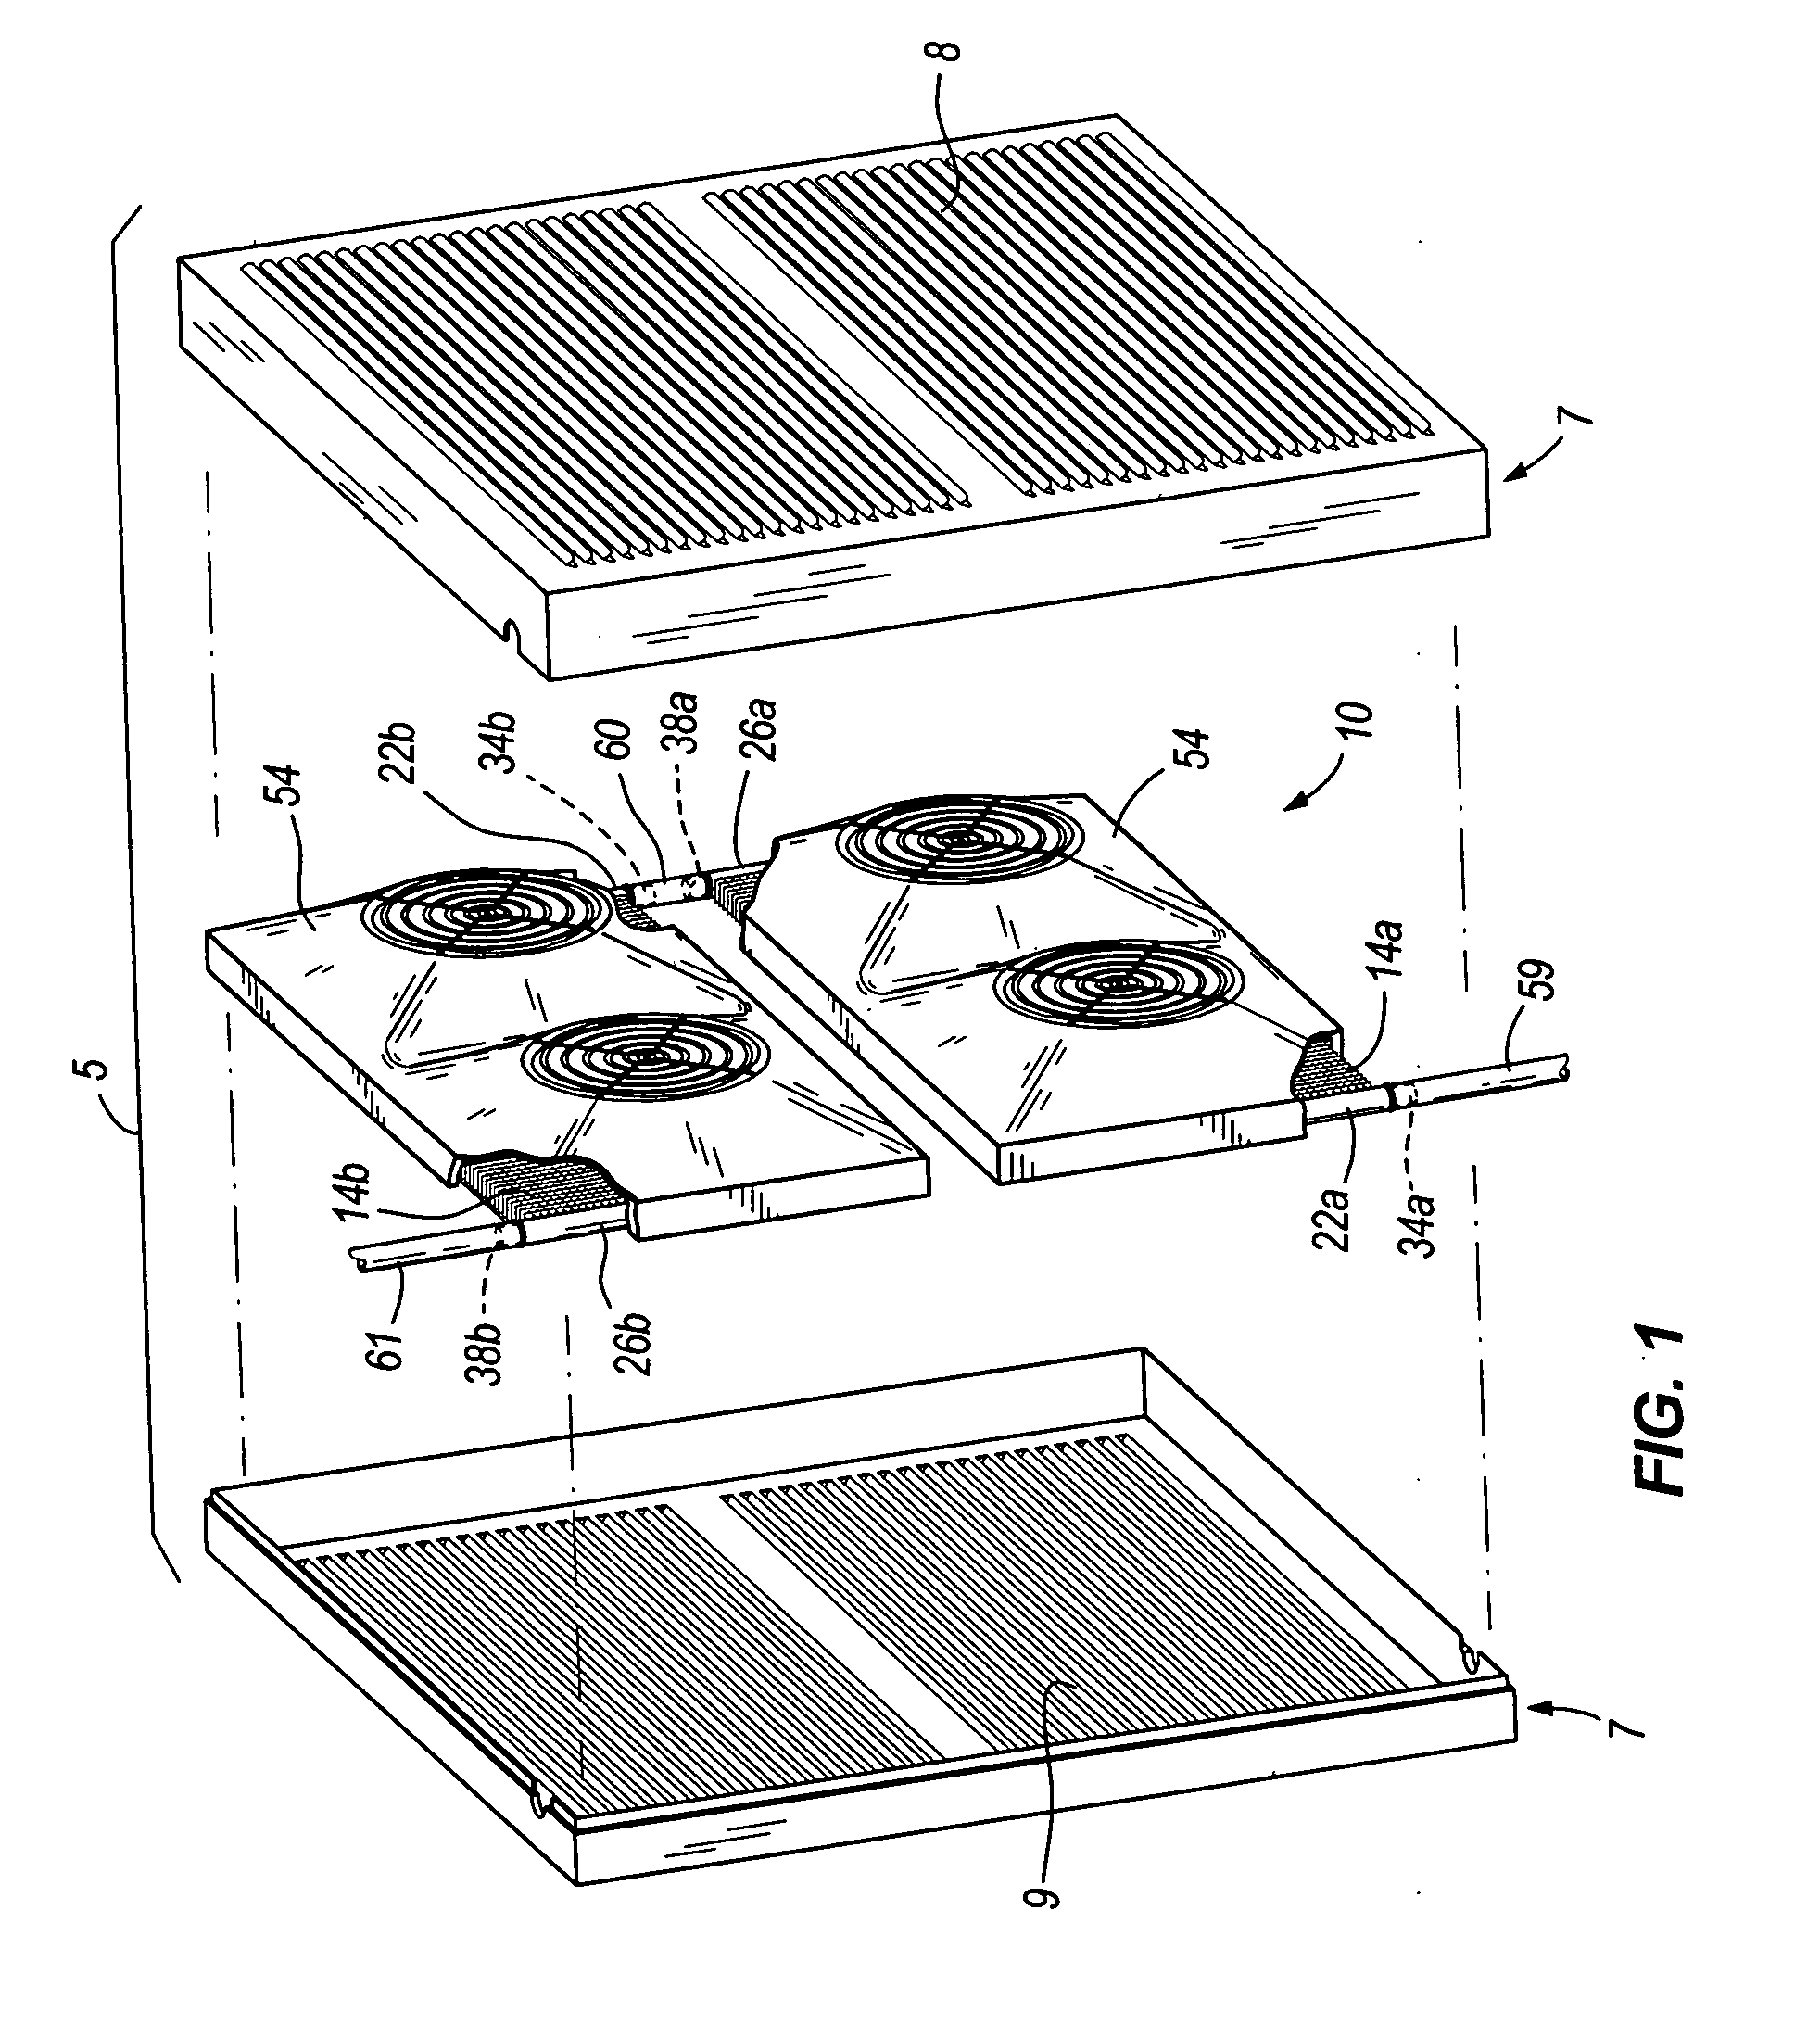 Microchannnel evaporator assembly